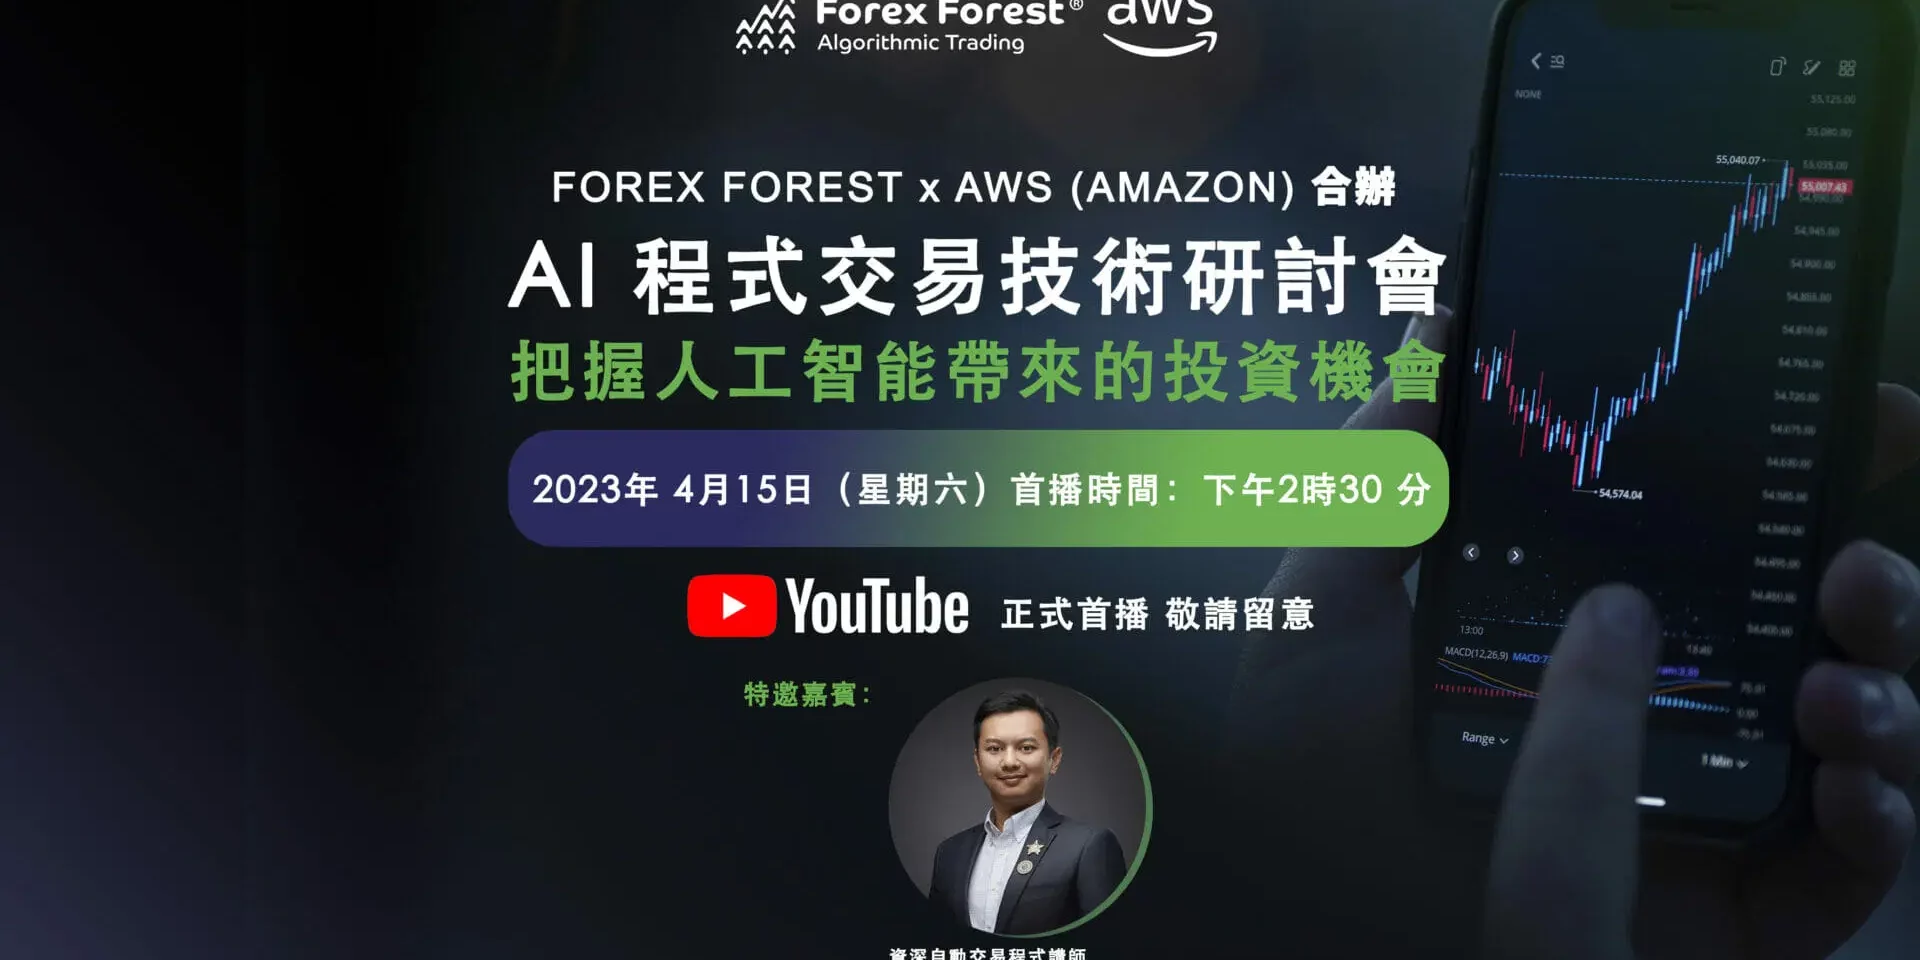 Forex Forest x AWS (Amazon) 合辦 – AI程式交易技術研討會